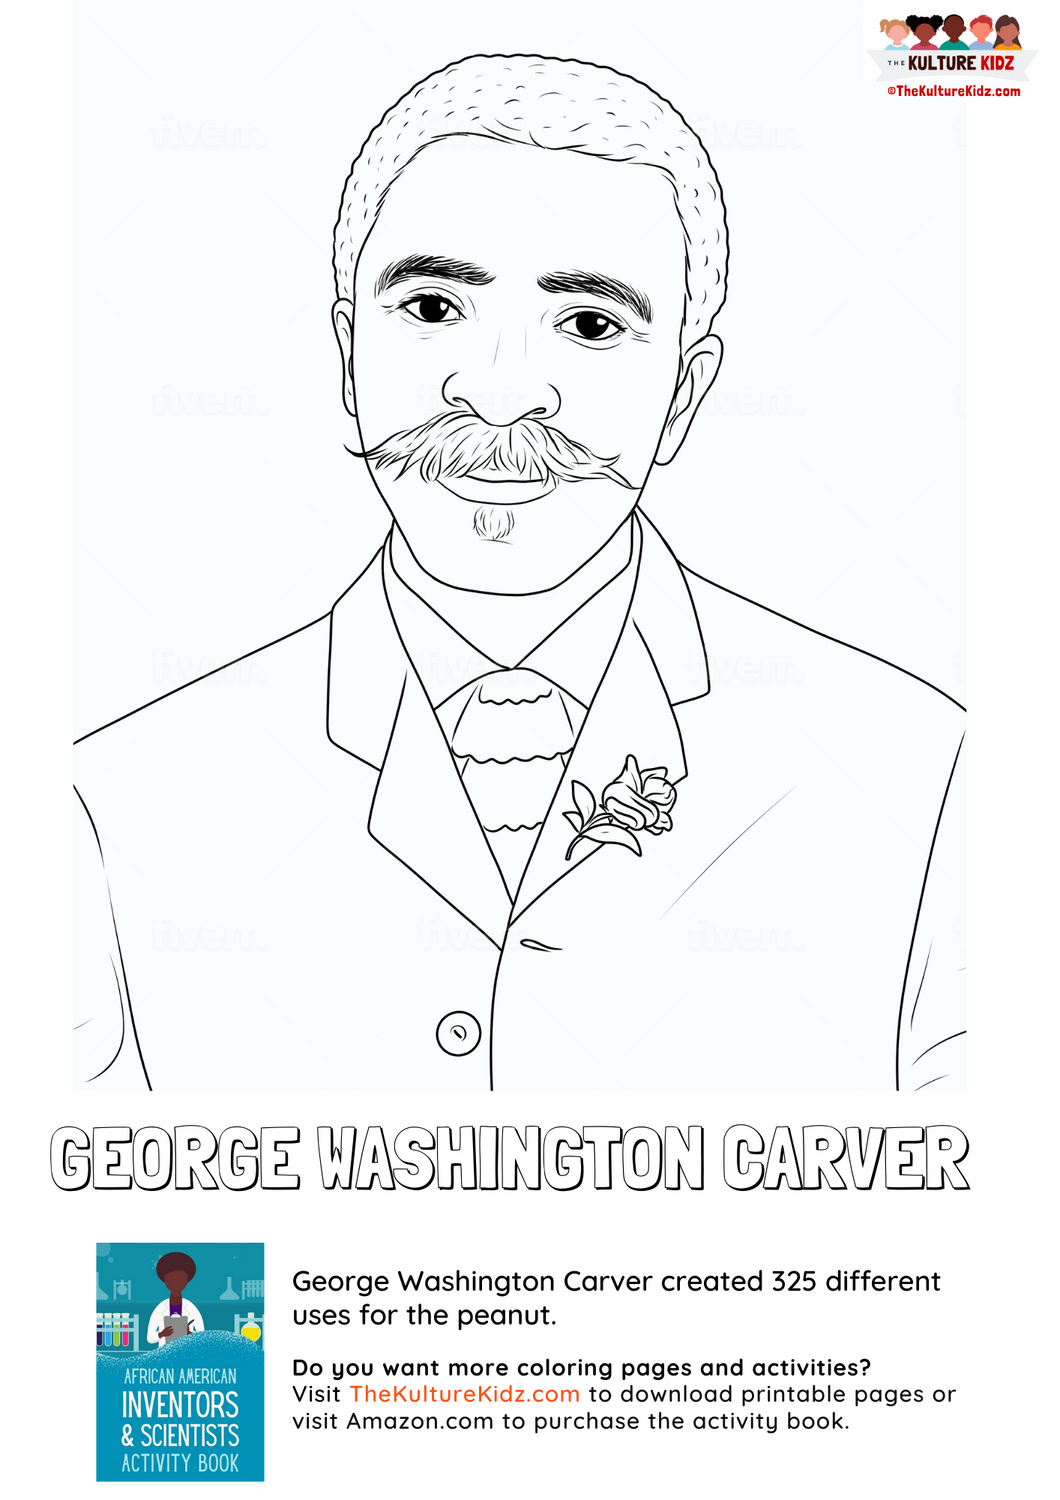 George washington carver coloring page â the kulture kidz